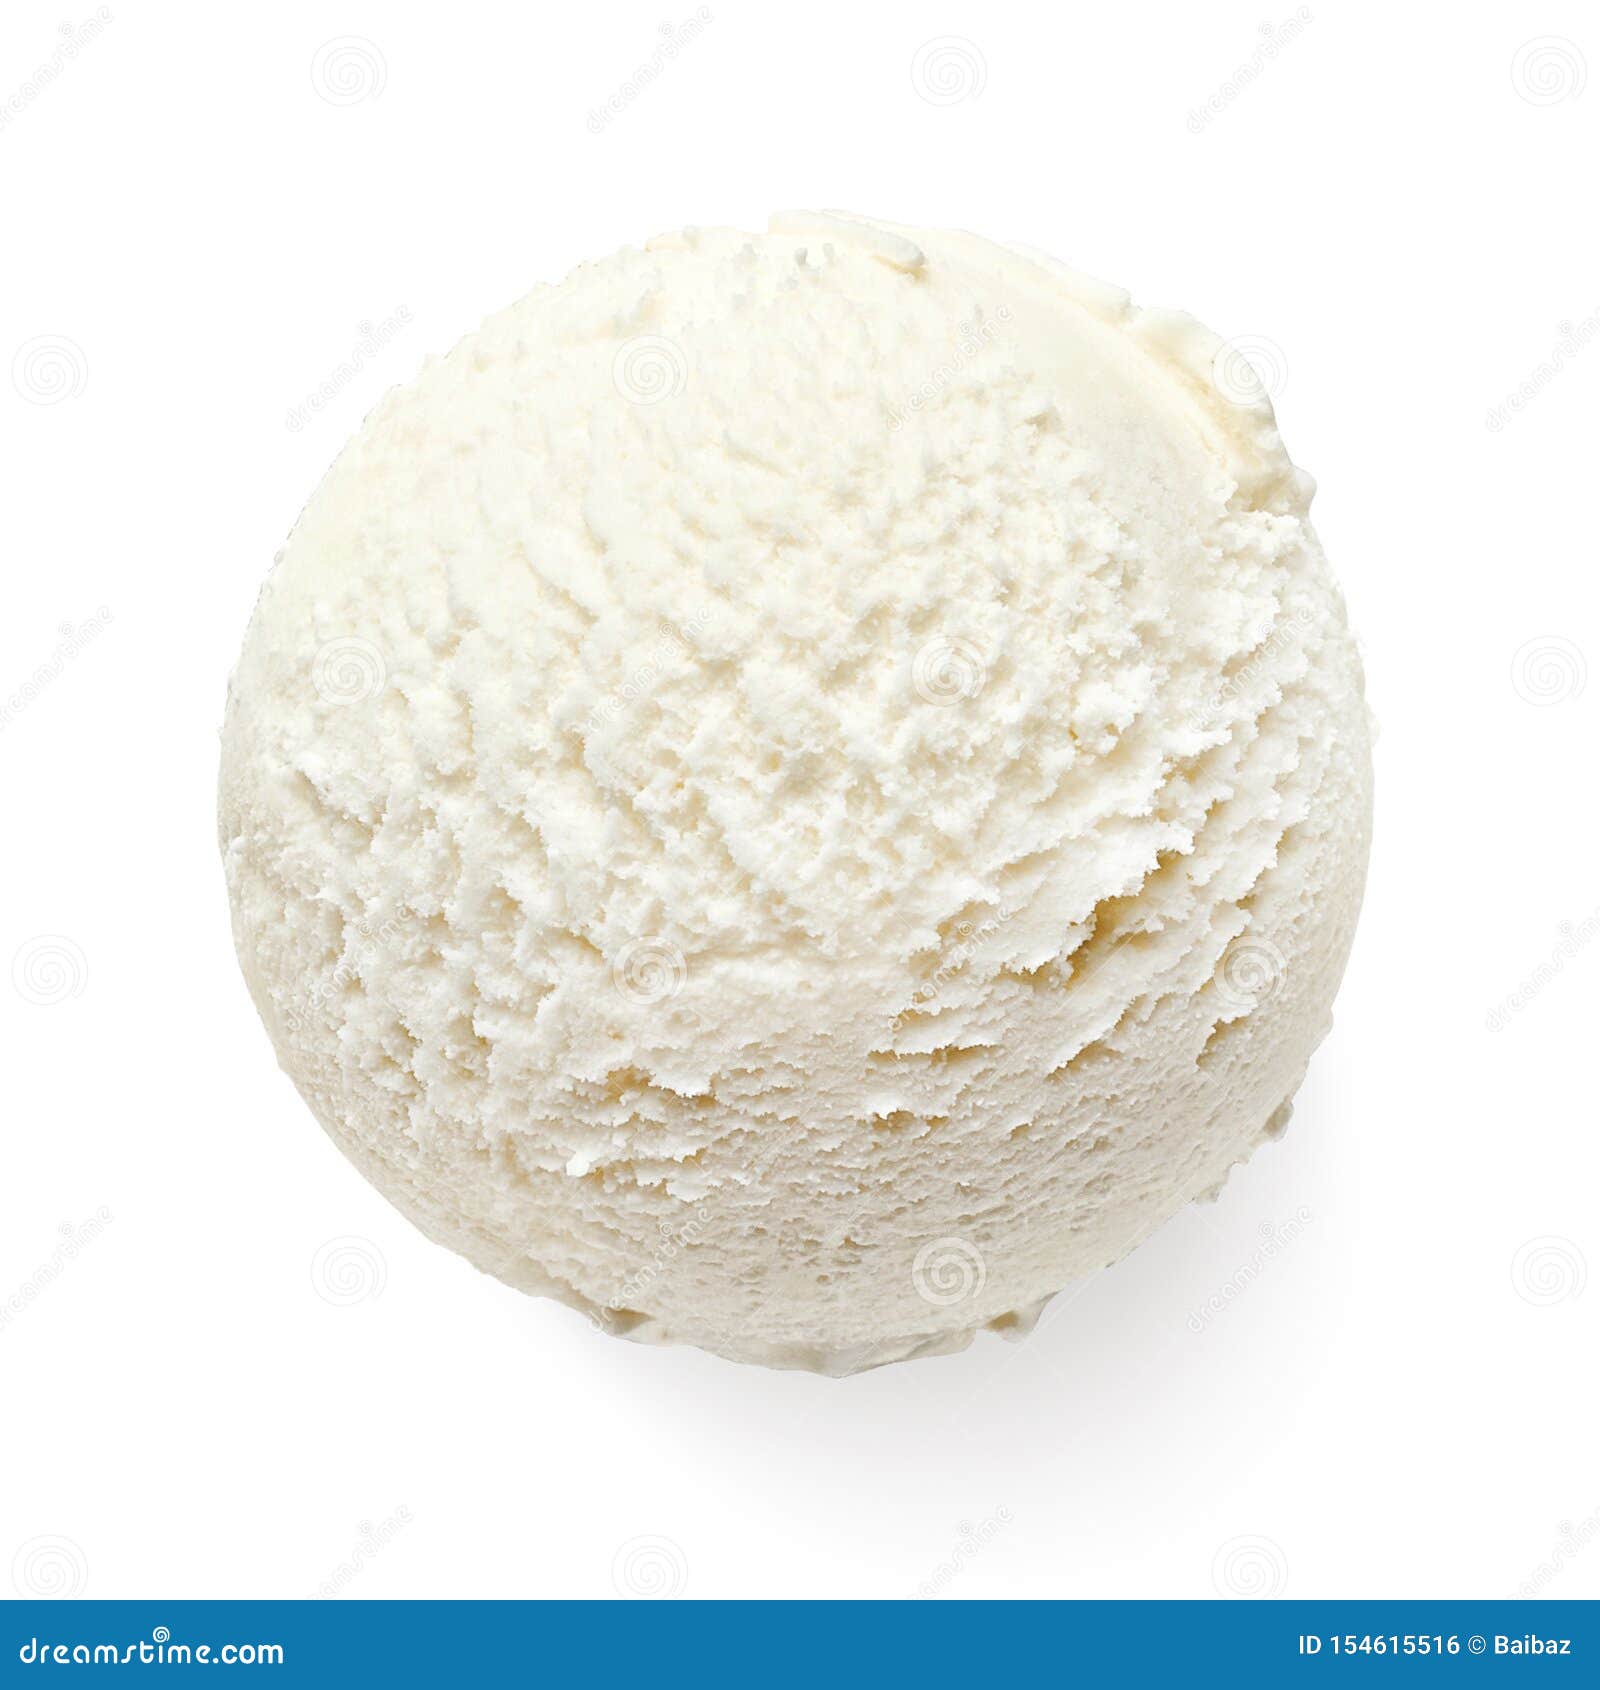 single vanilla ice cream ball or scoop